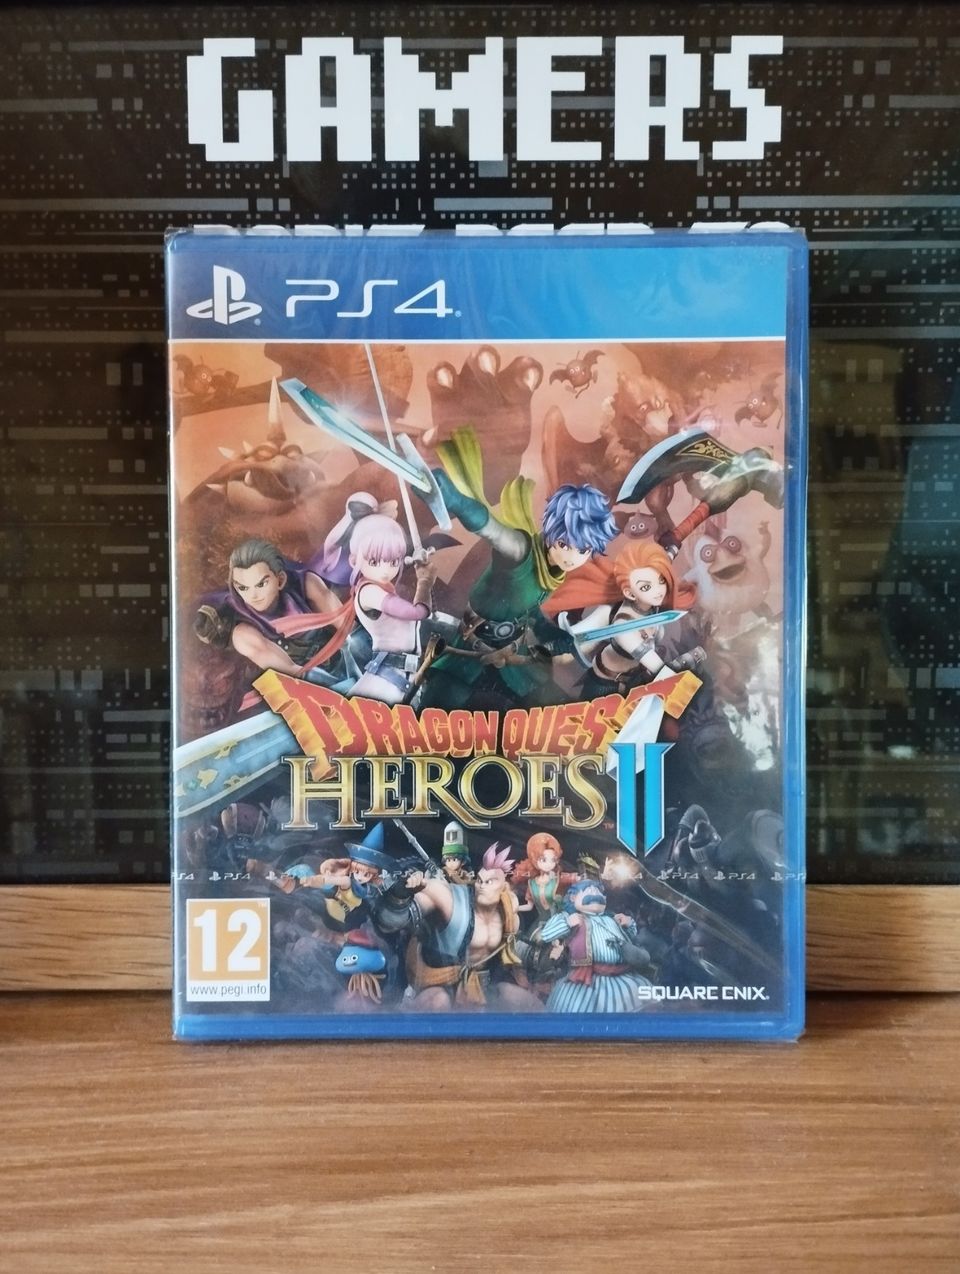 Dragon quest heroes 2 PS4